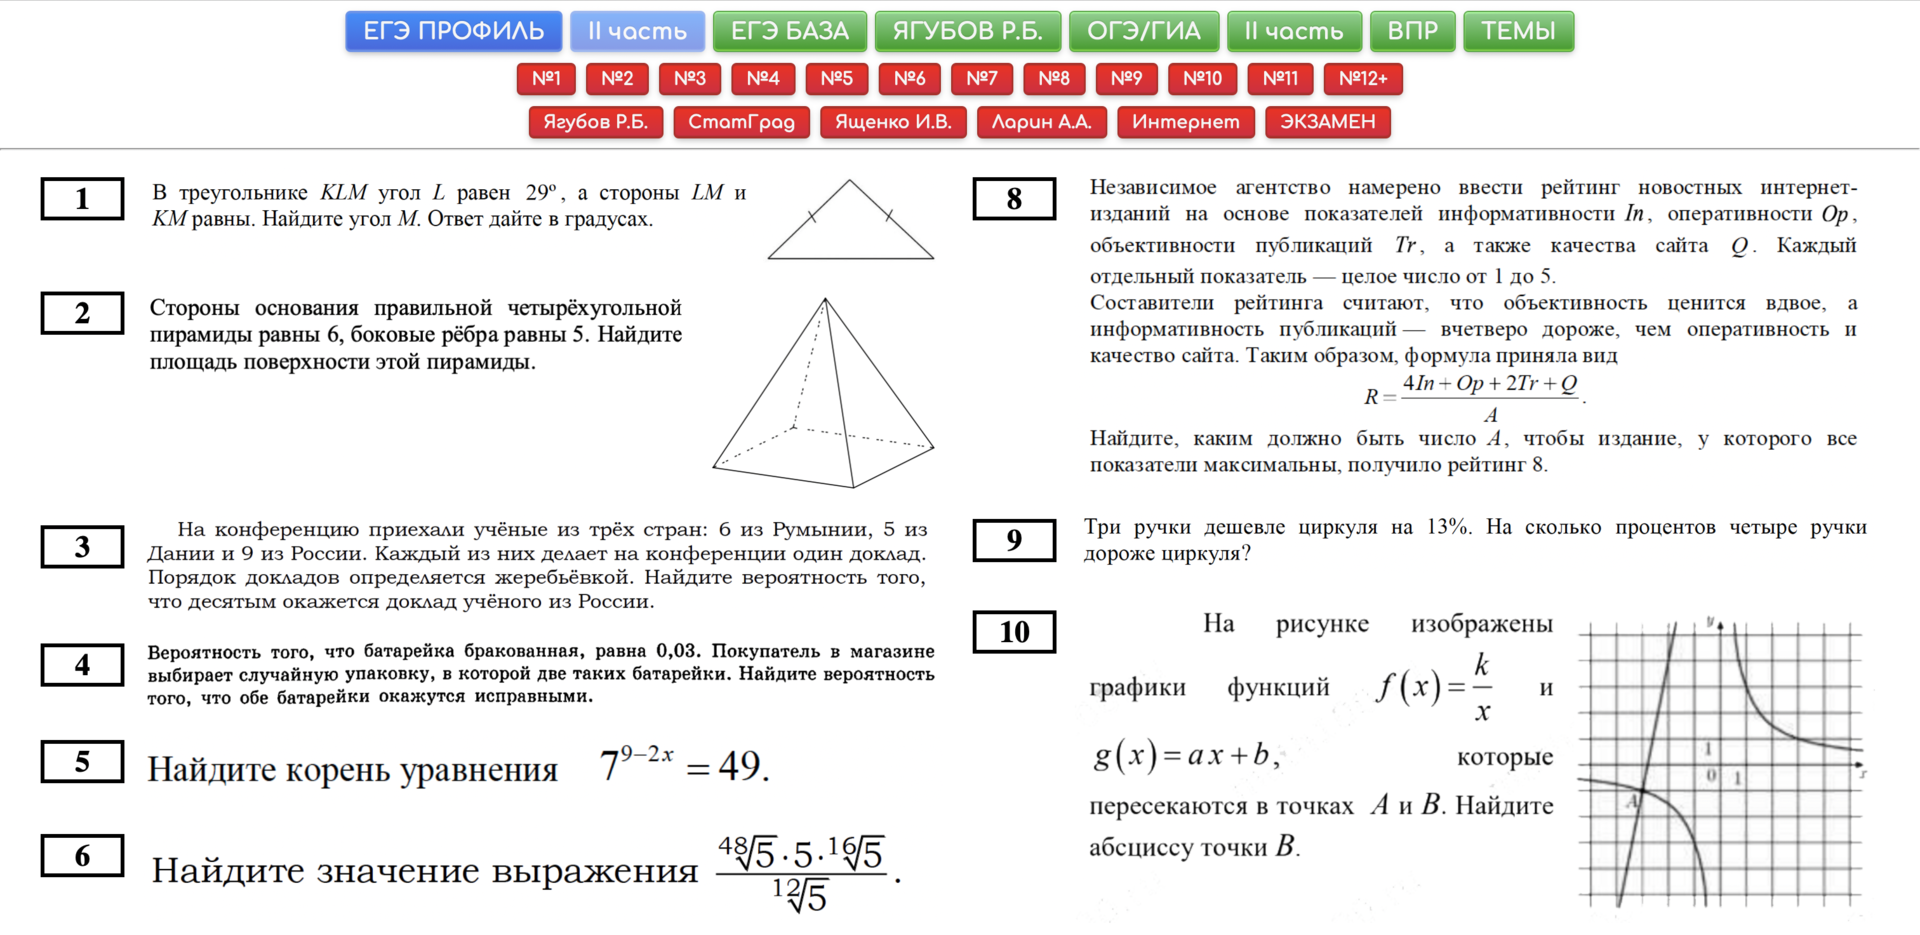 Ягубов РФ математика 5 класс.